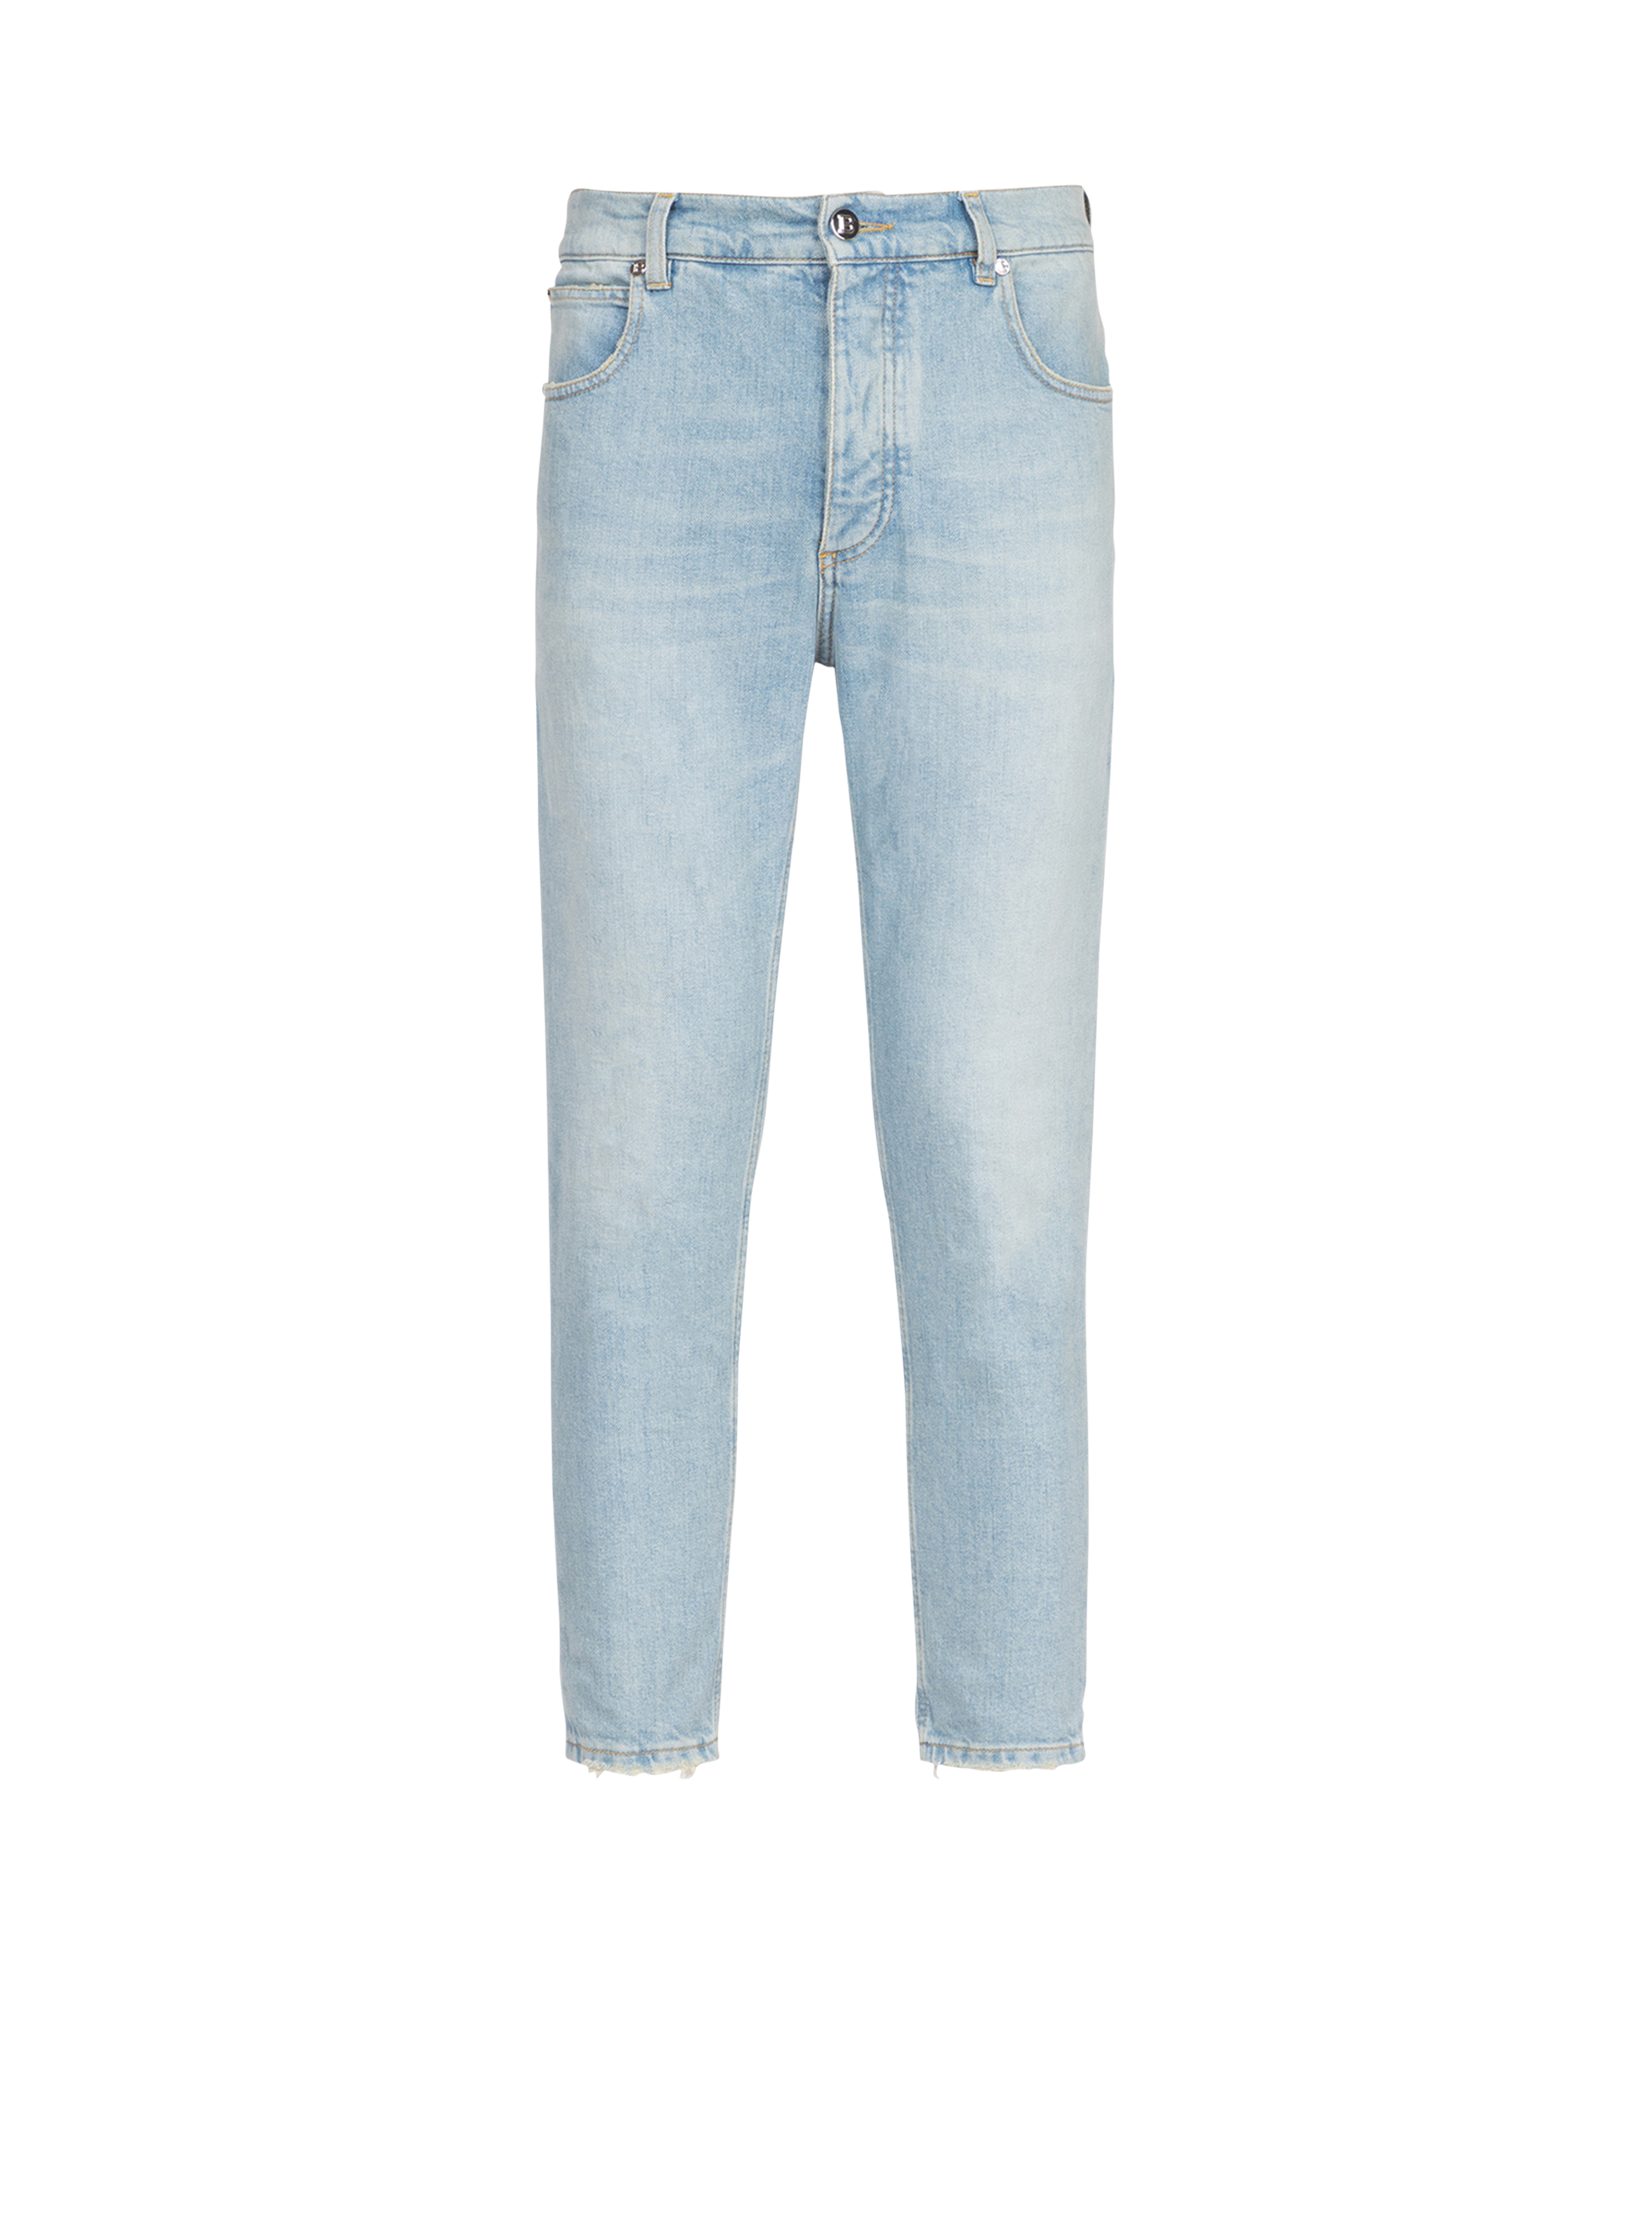 Slim cut eco-designed denim cotton jeans with embossed Balmain logo, blue